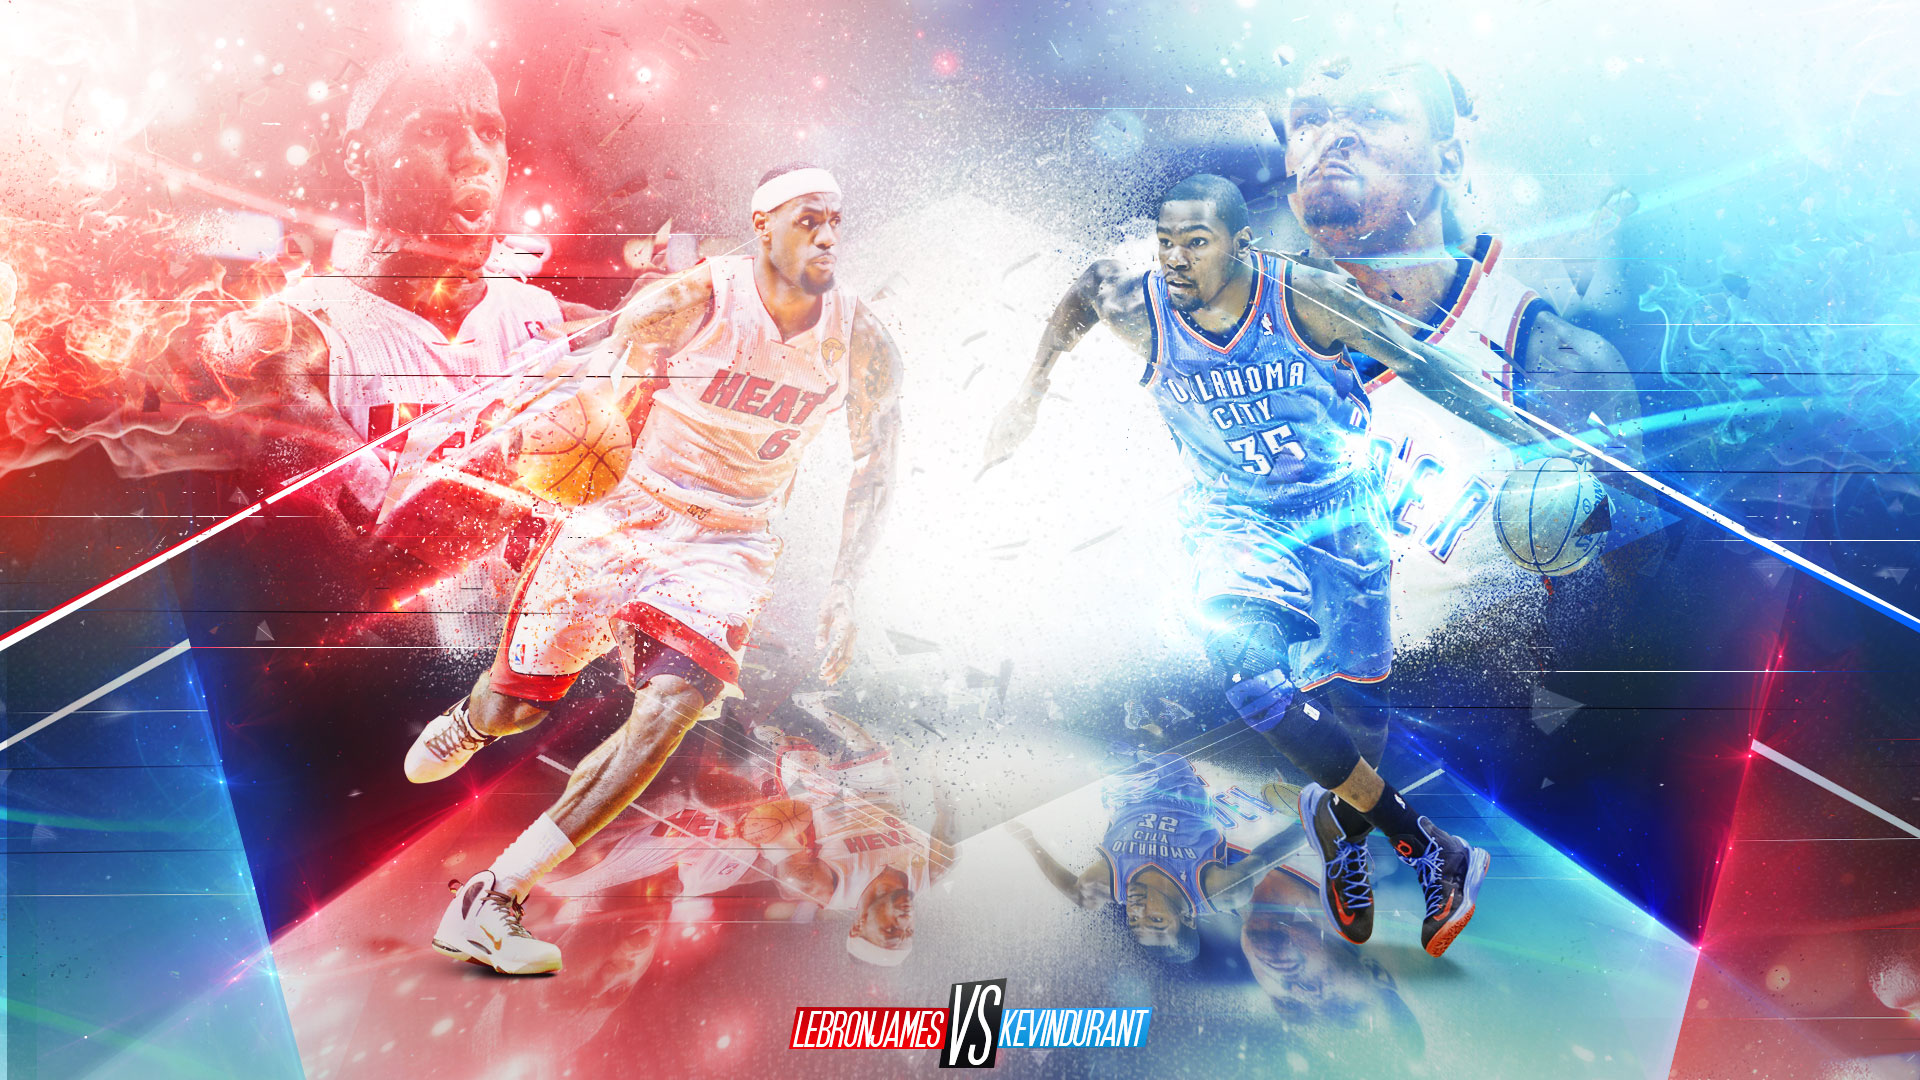 LeBron James vs Kevin Durant Wallpaper